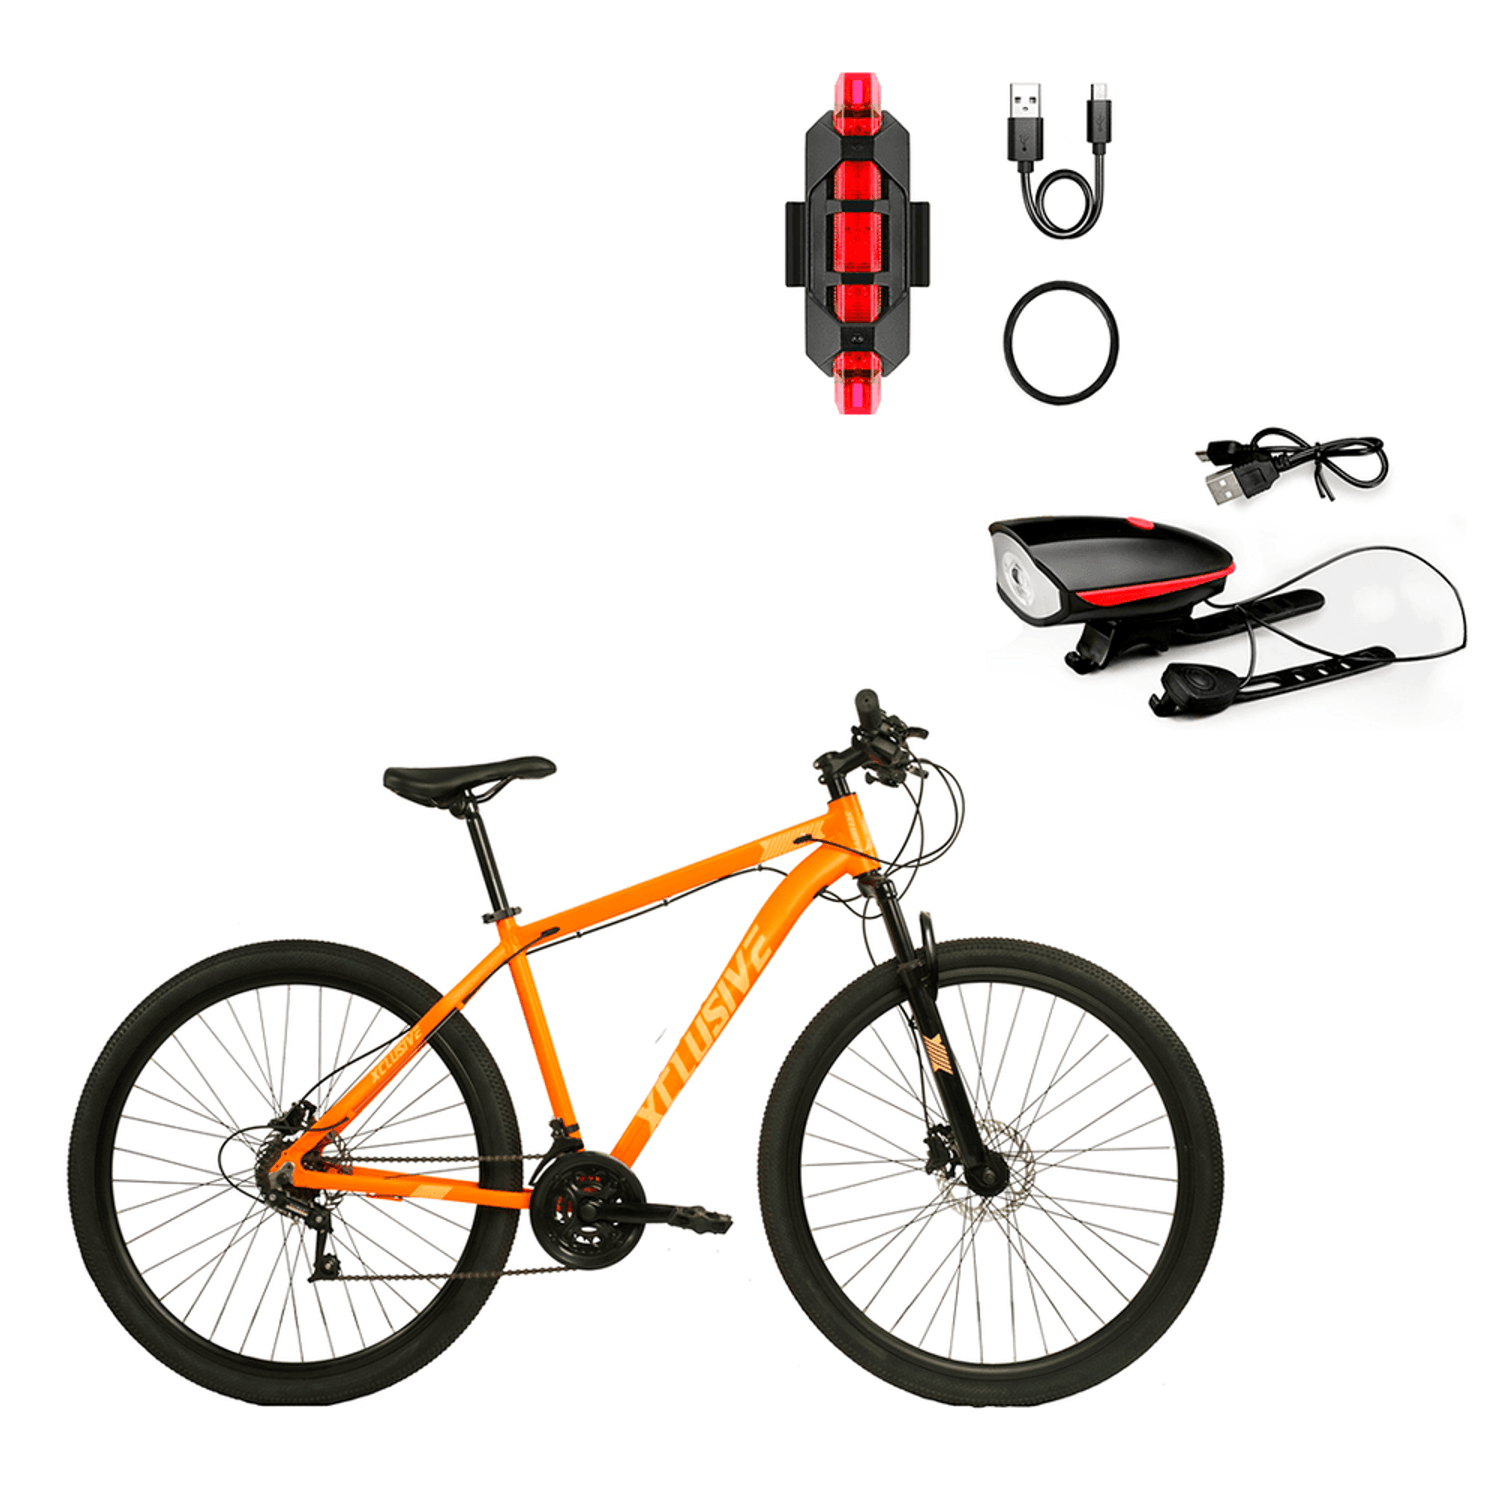 Kit de Herramientas para Bicicleta - Promart